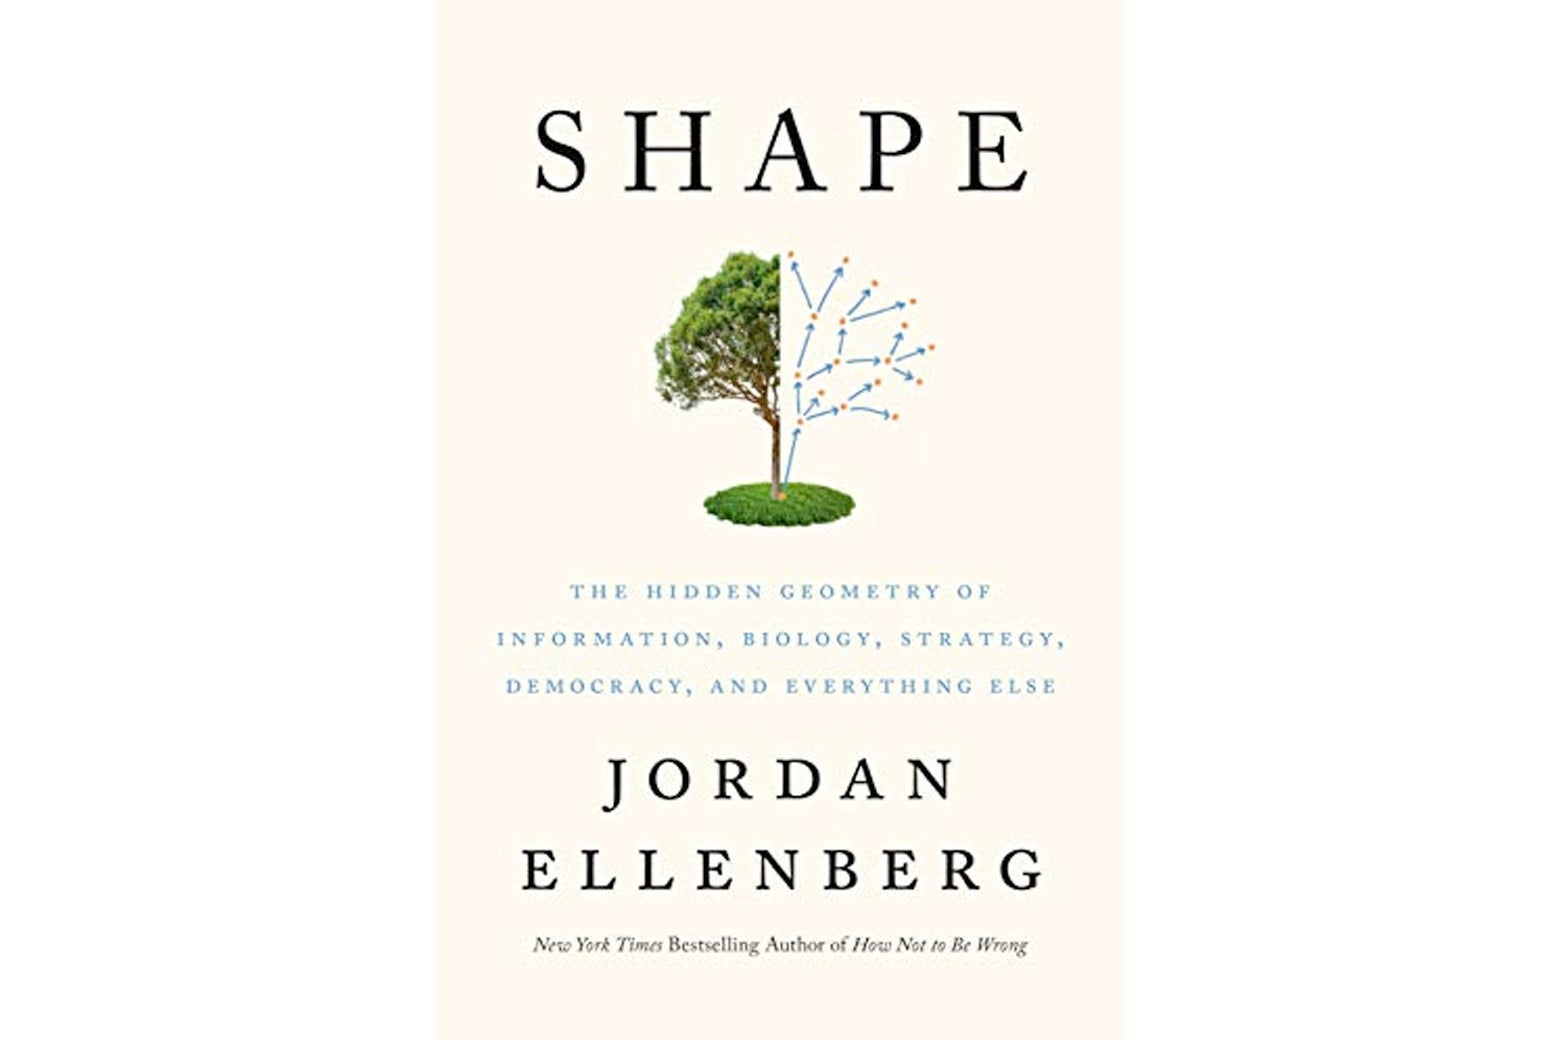 The cover of Jordan Ellenberg's book Shape